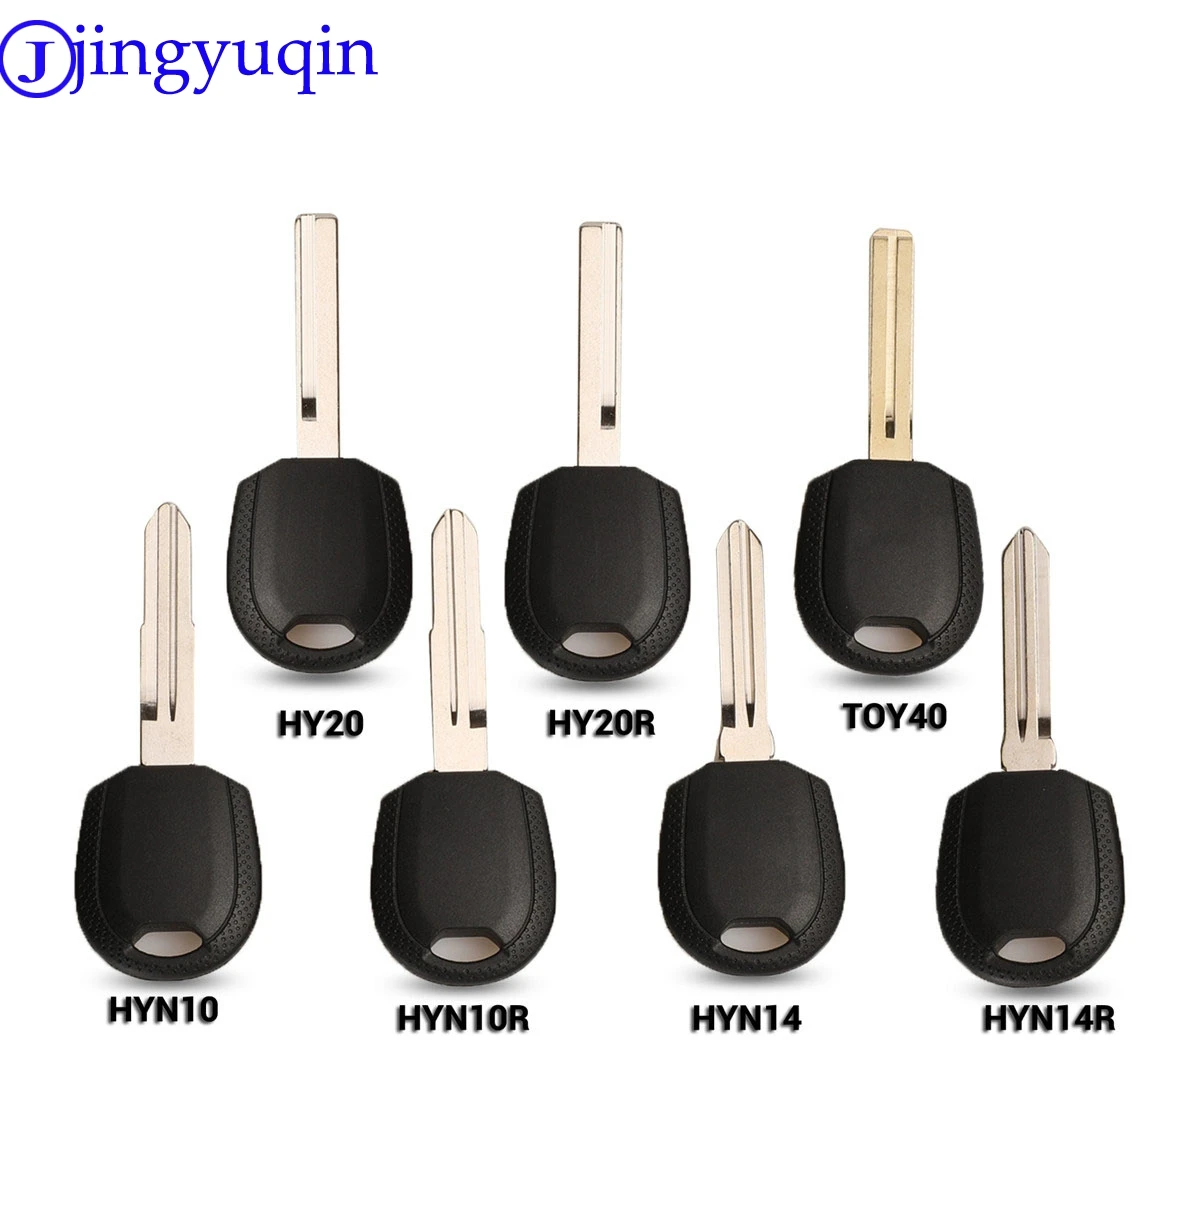 jingyuqin 10p Transponder Key Blank For Hyundai Accent I30 IX35 Sonata NF Elantra Tucson Verna Kia Car Key Shell Case